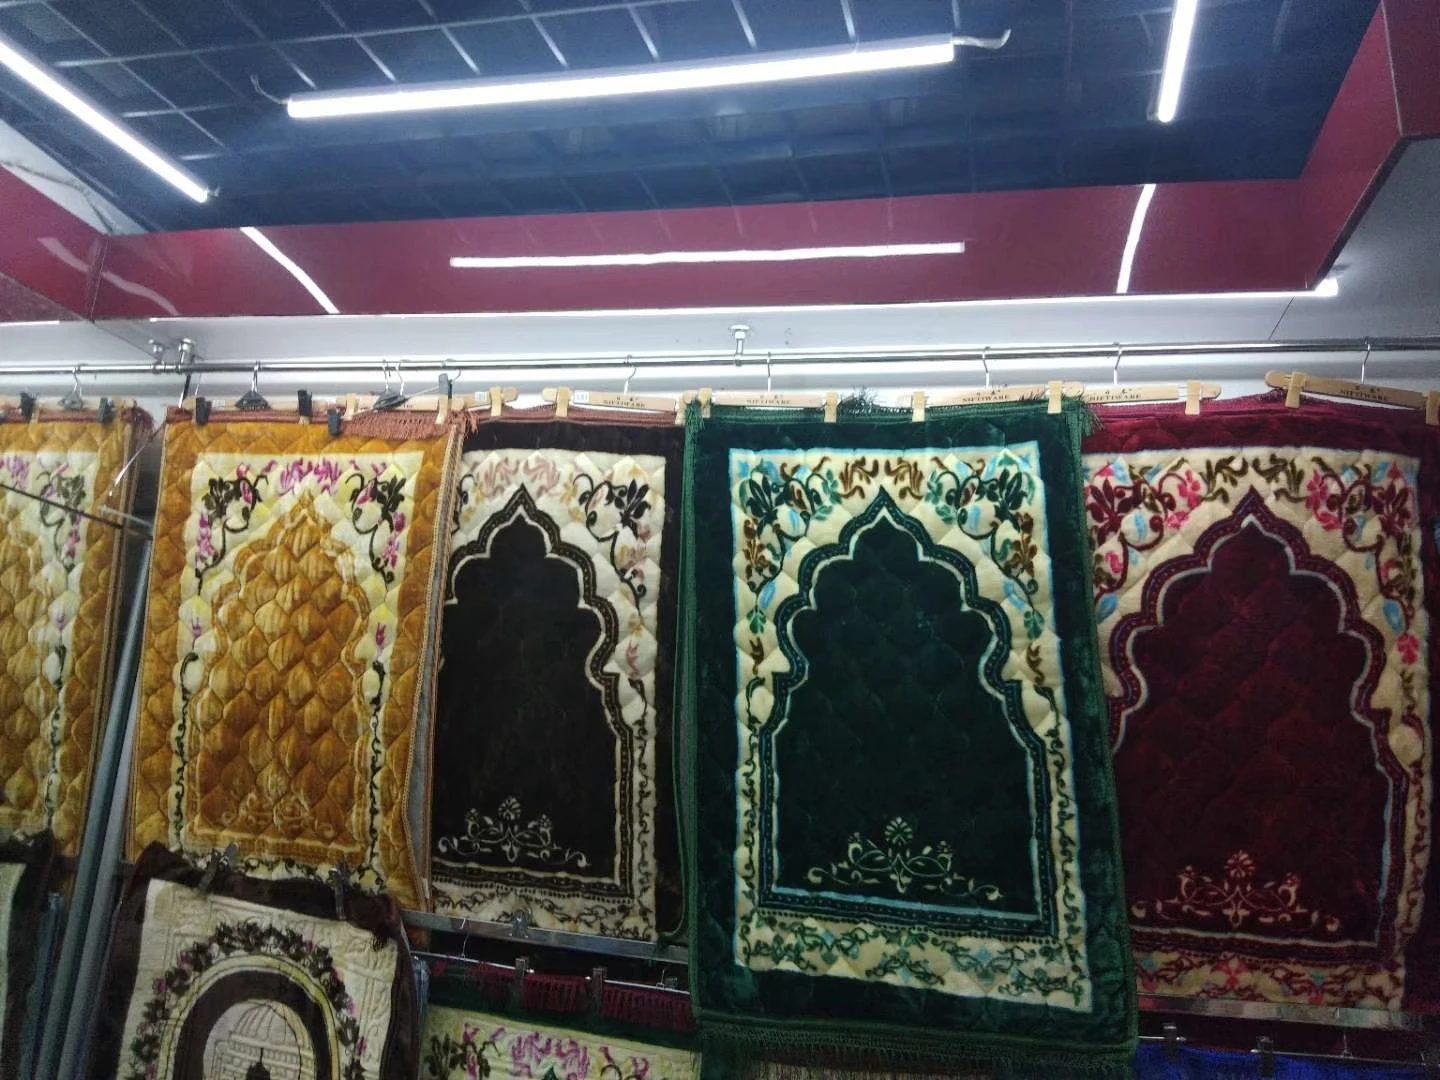 prayer mat comfortable for knee, cheap prayer mat for muslim,Amazon hotsale muslim prayer